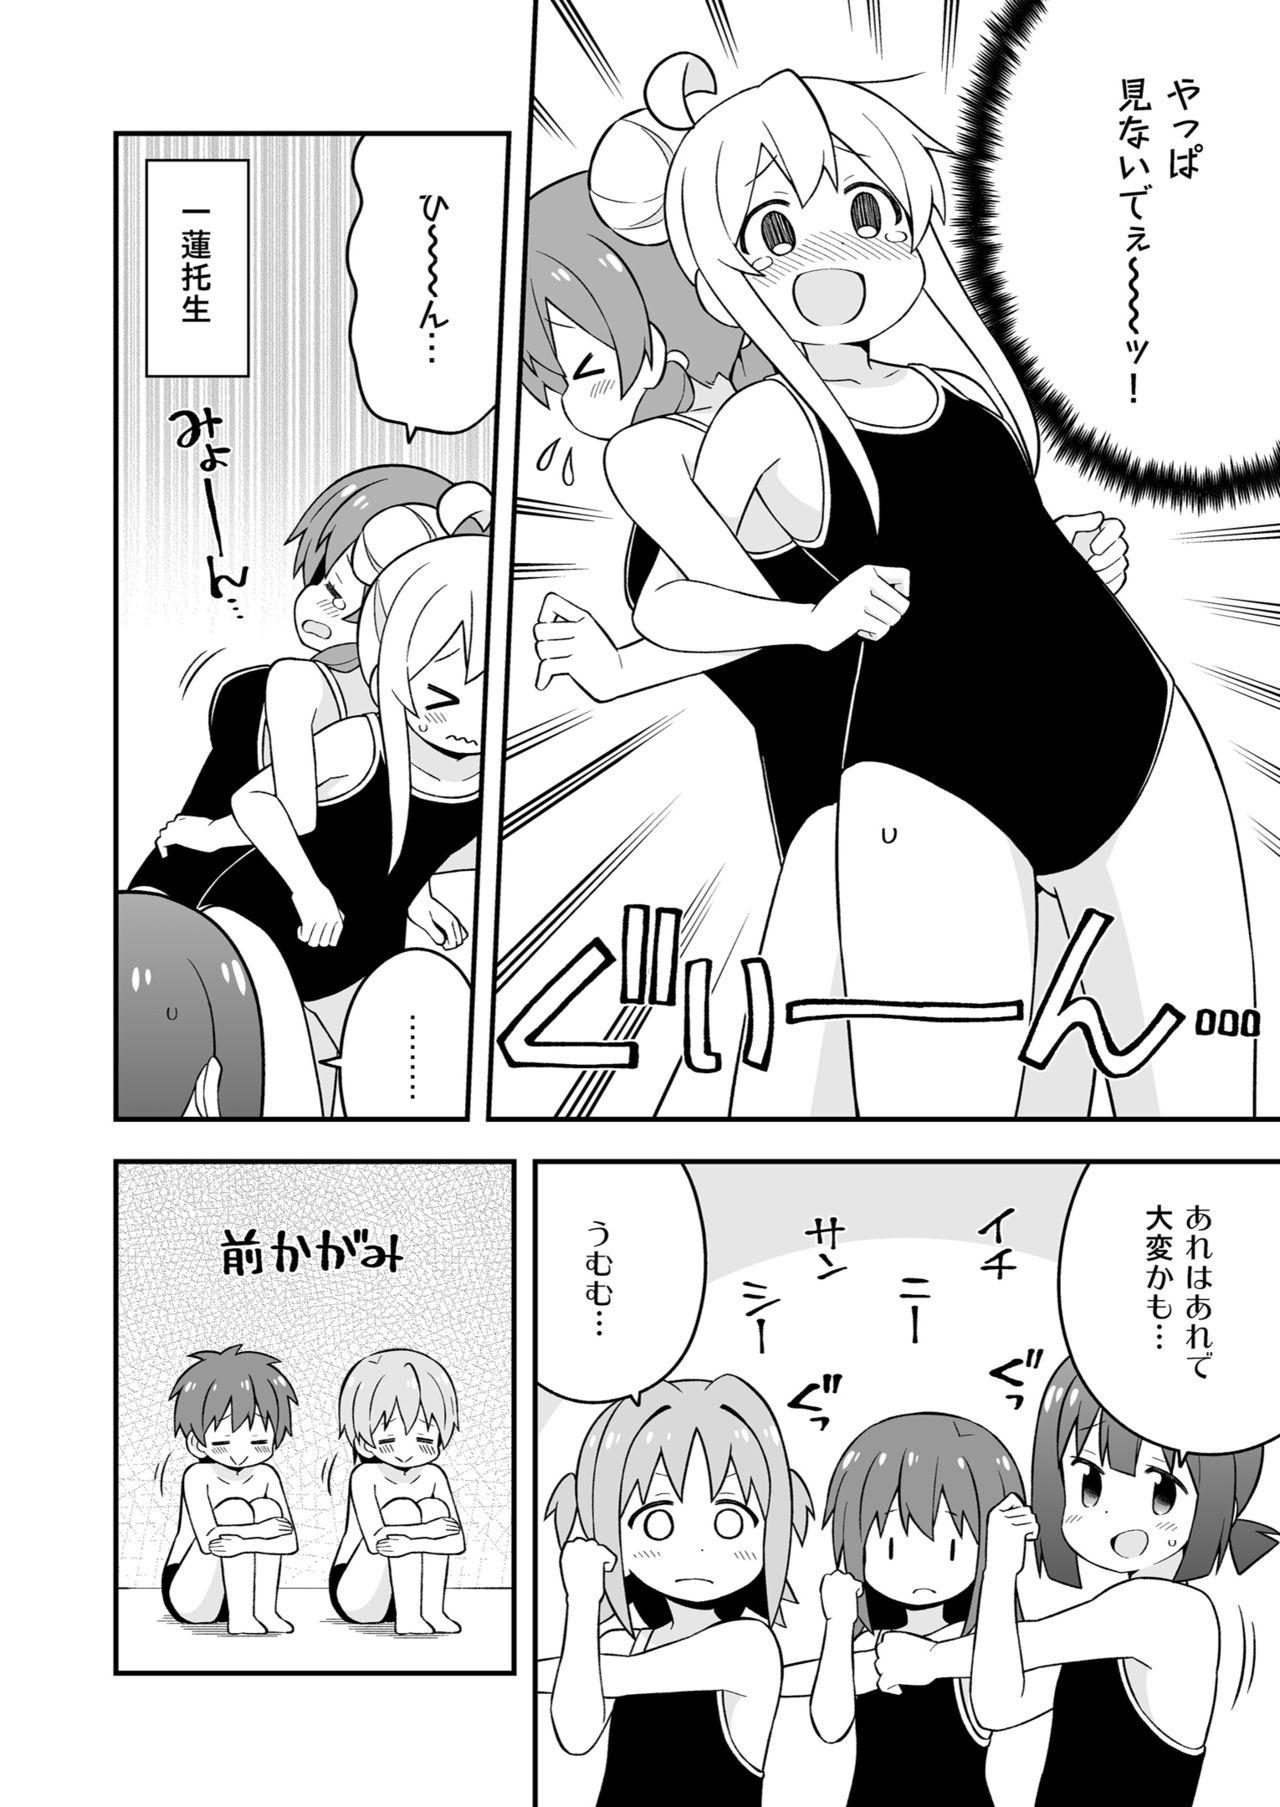 Wam Onii-chan wa Oshimai! 17 First - Page 10